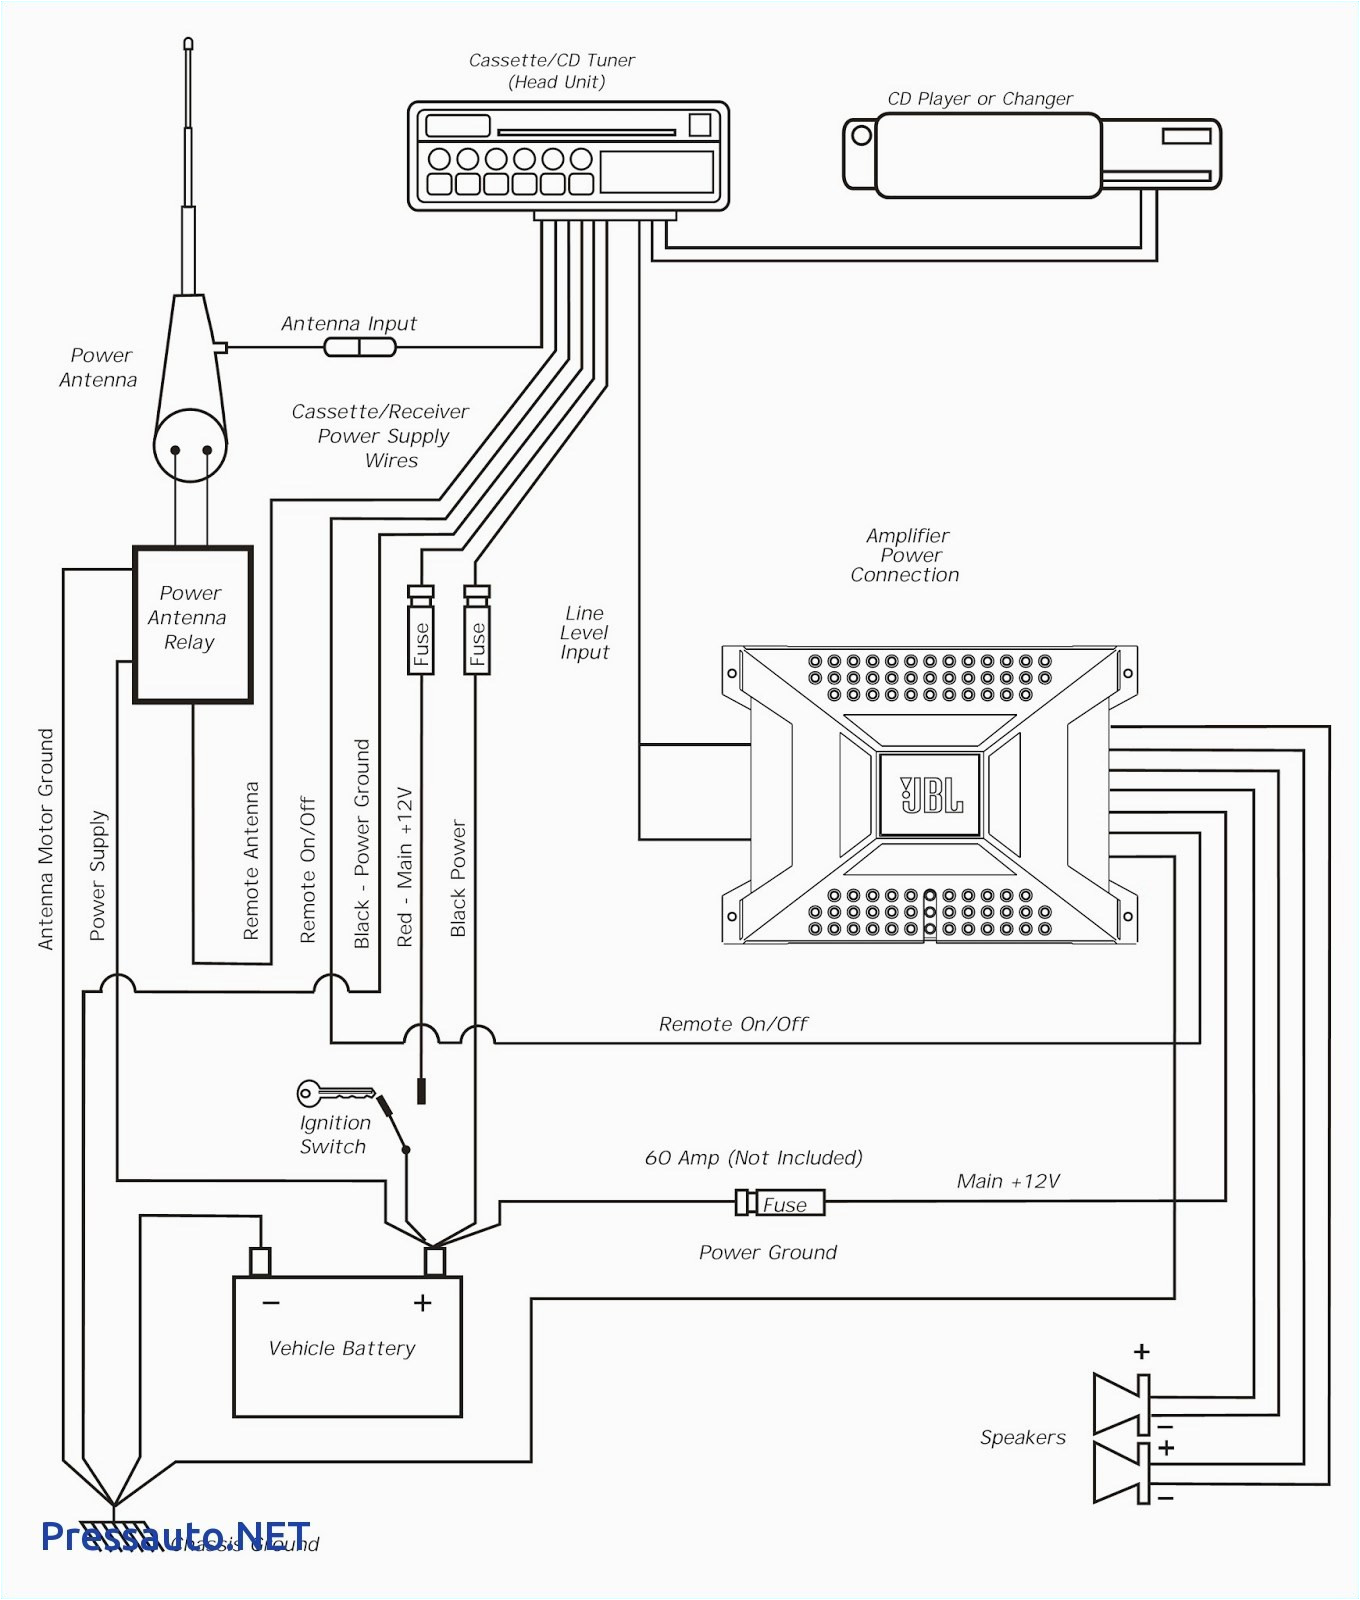 wiring diagram for cd player wiring diagram wiring diagram for clarion cd player jvc car stereo